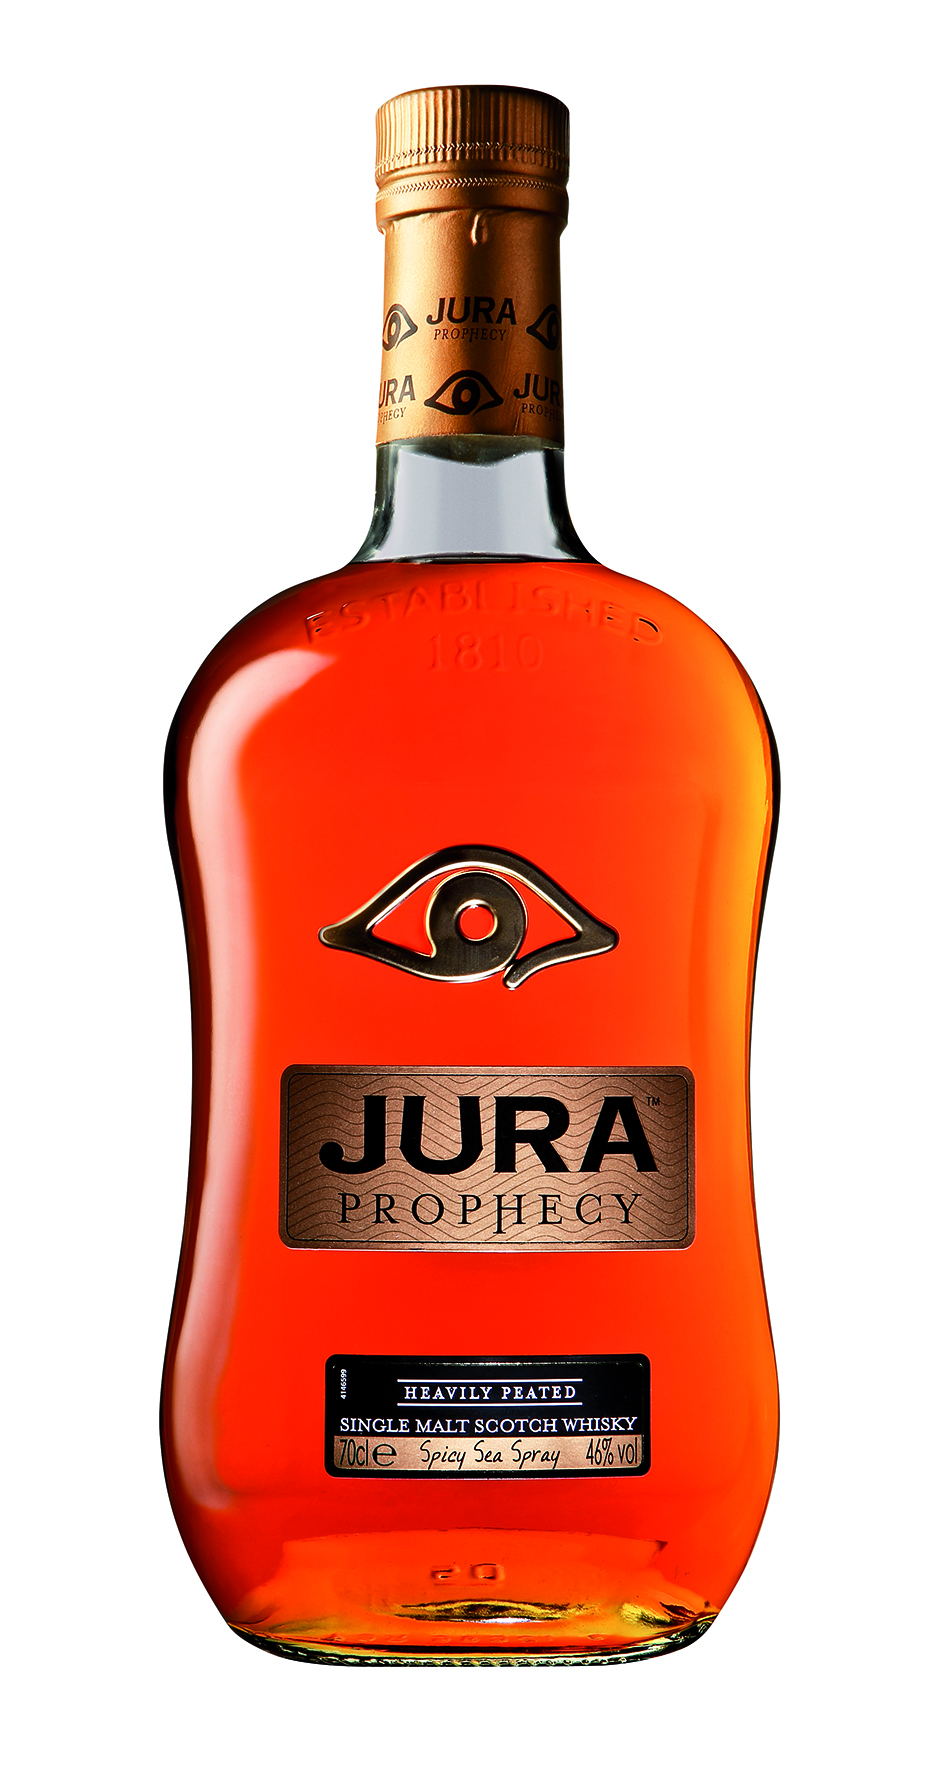 Isle of Jura Prophecy Whisky